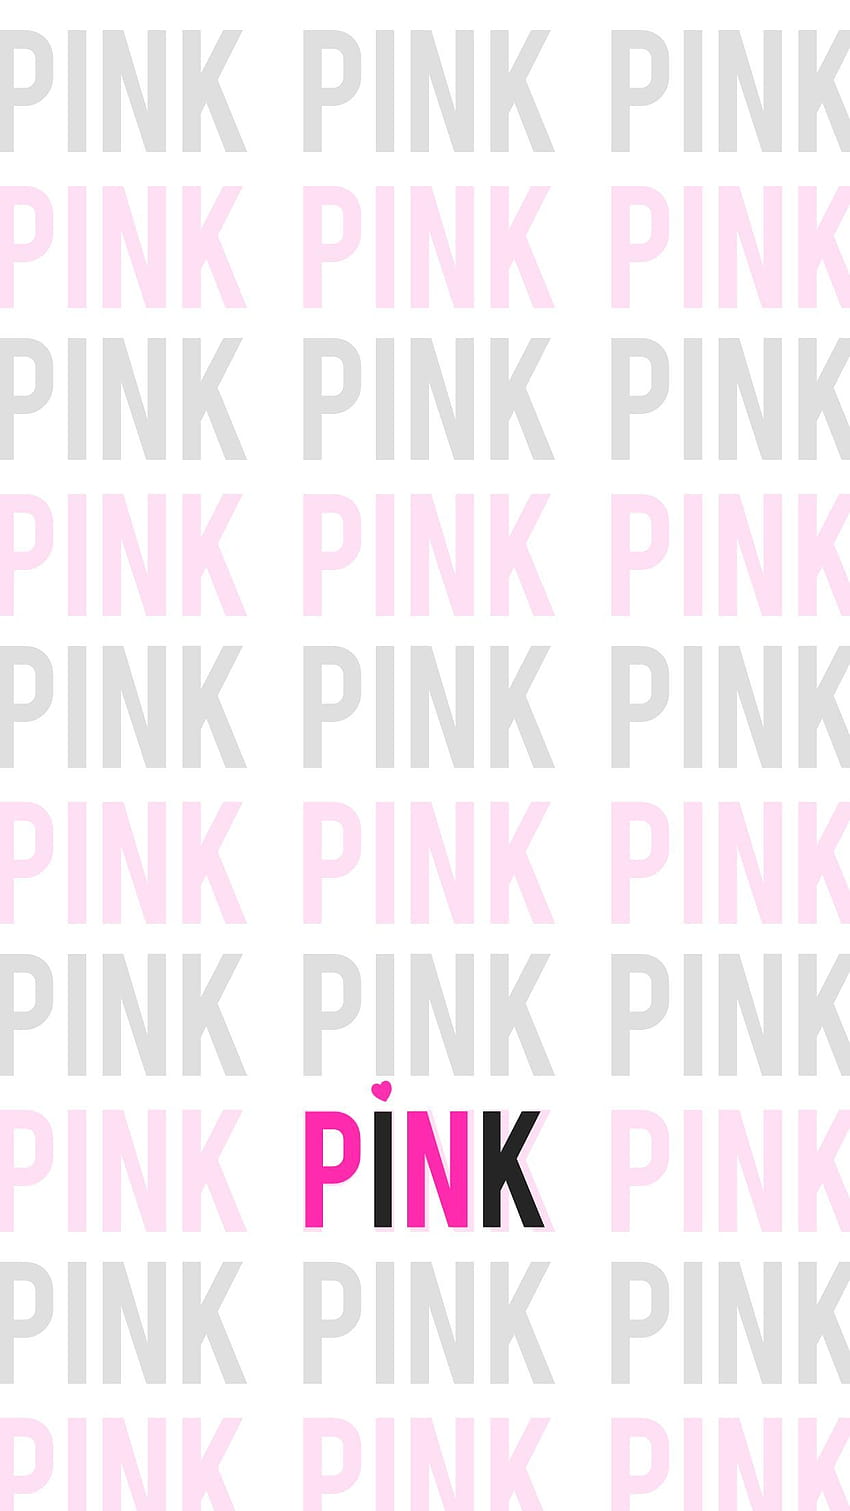 Victoria Secret Pink Wallpapers on WallpaperDog